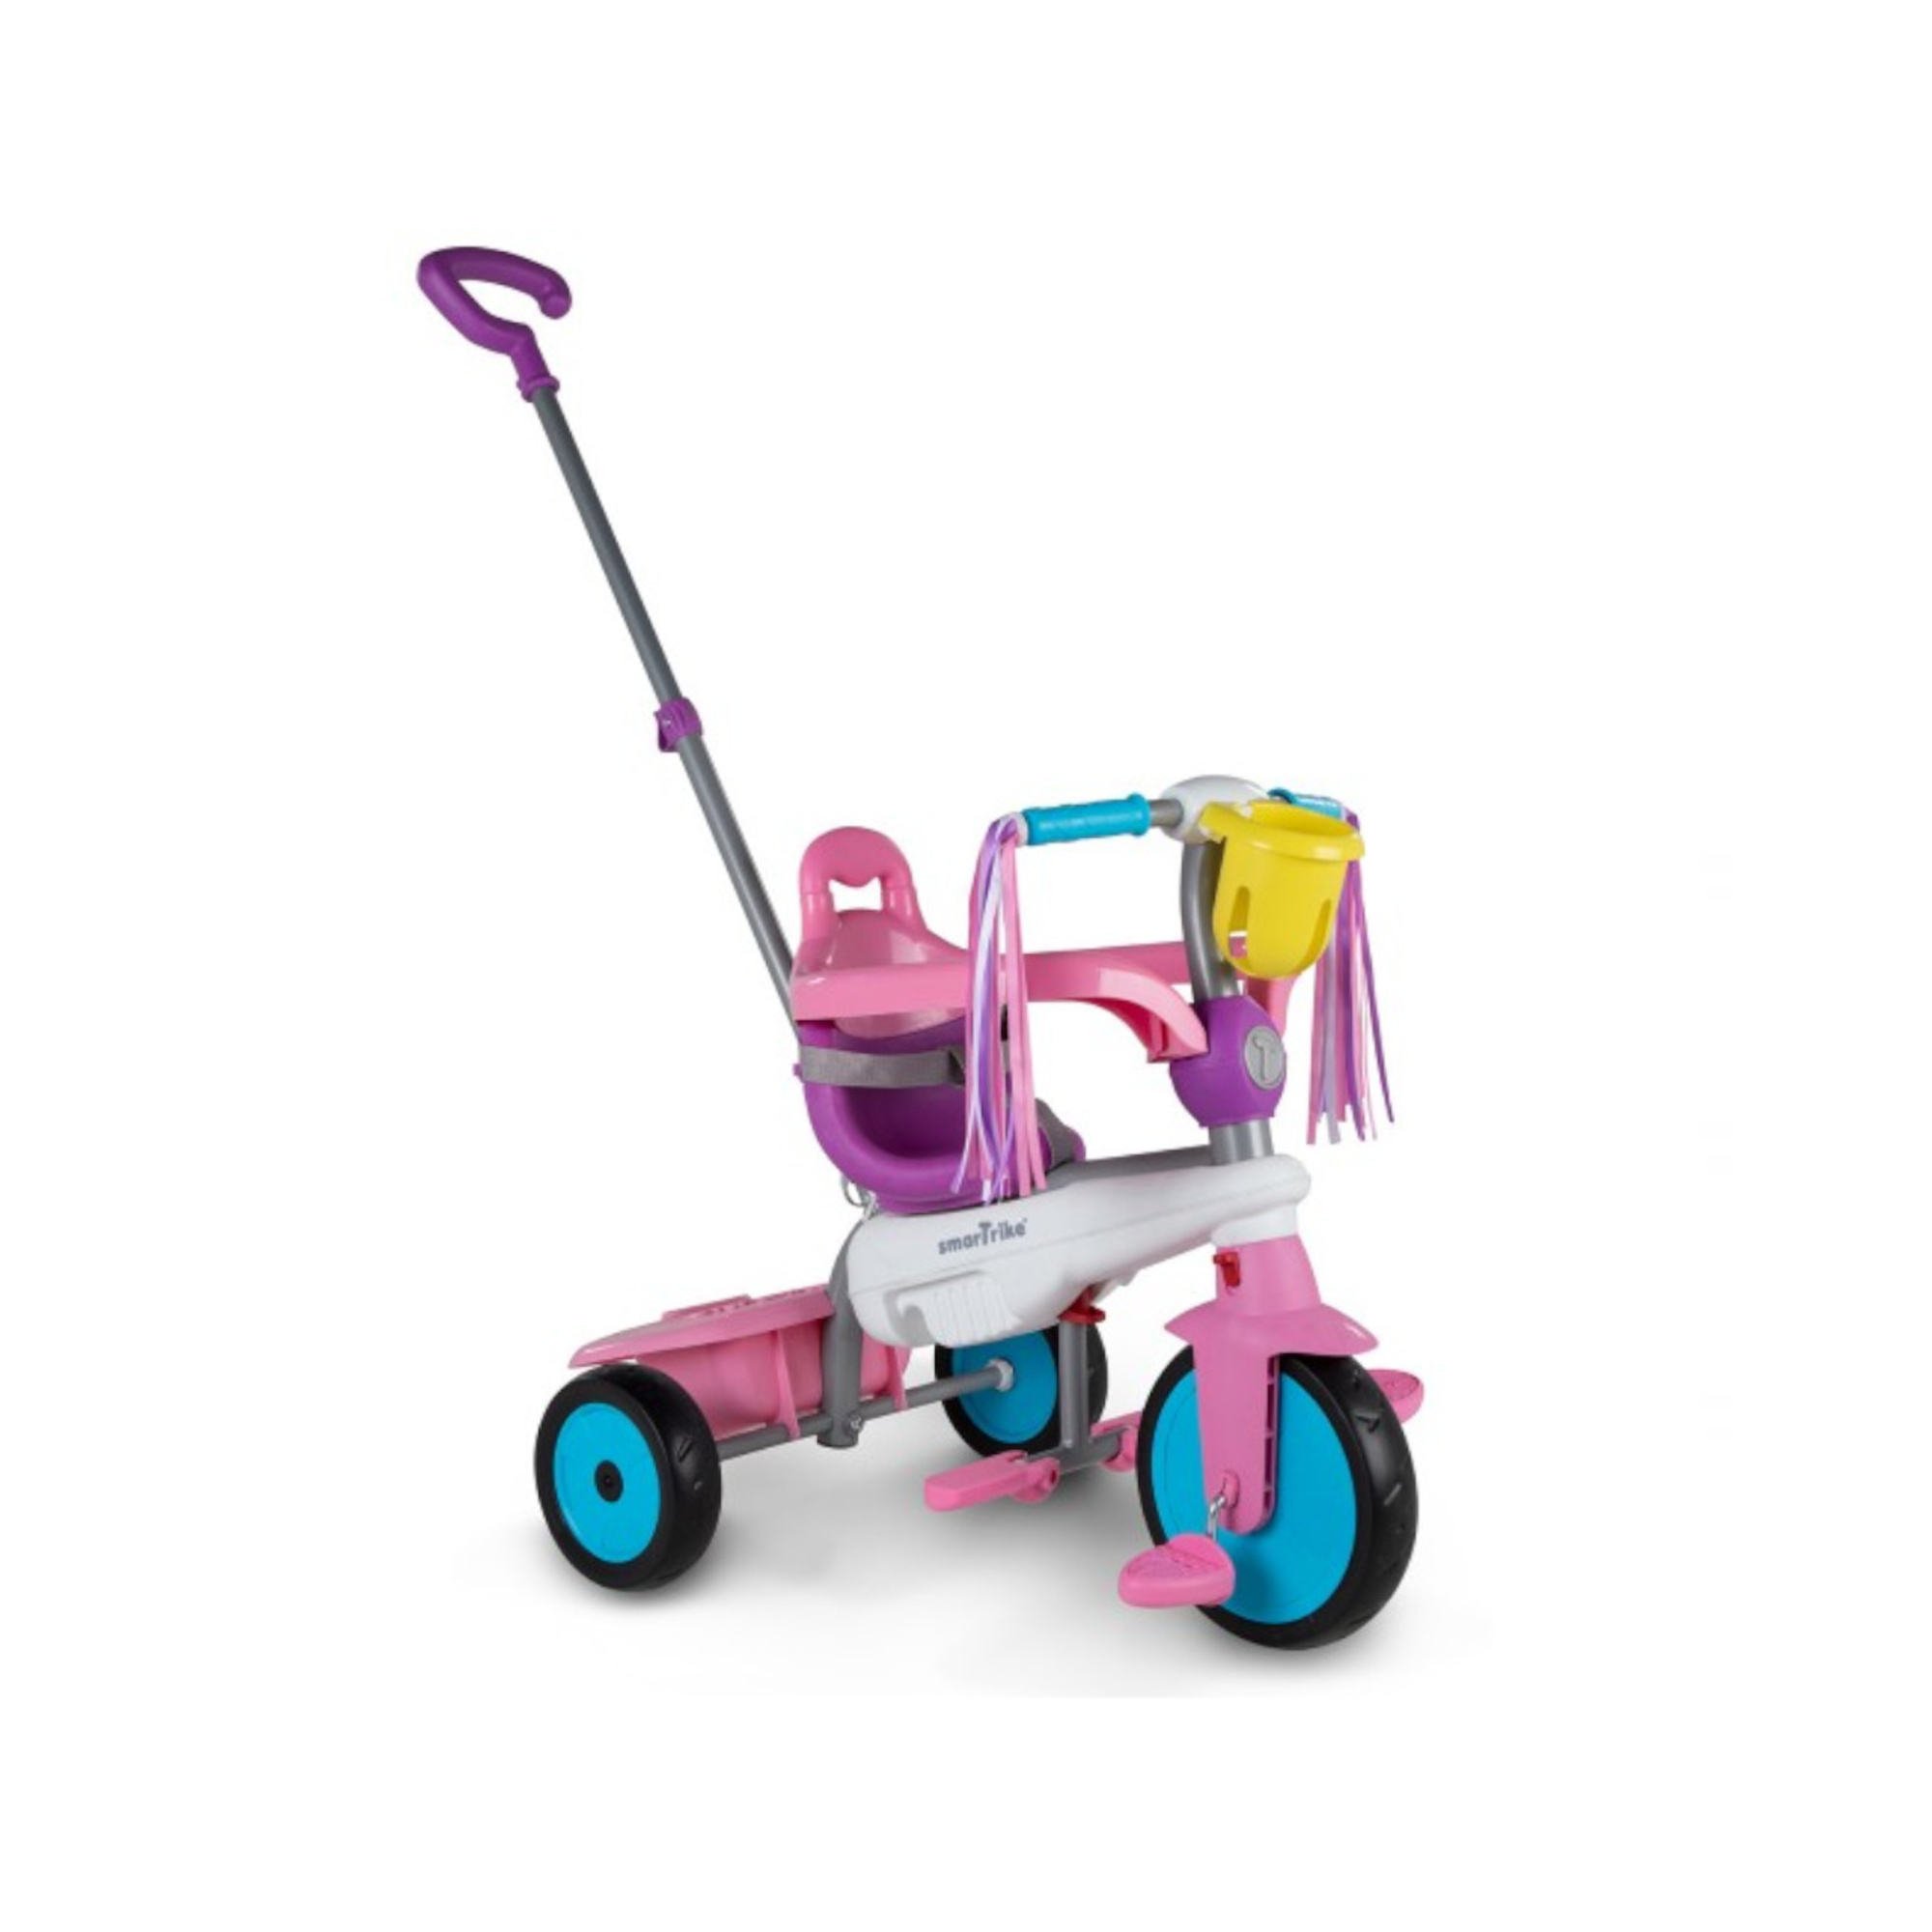 Triciclo breeze 3 in 1 rosa 15m+ - smart trike - Baby Smile Original